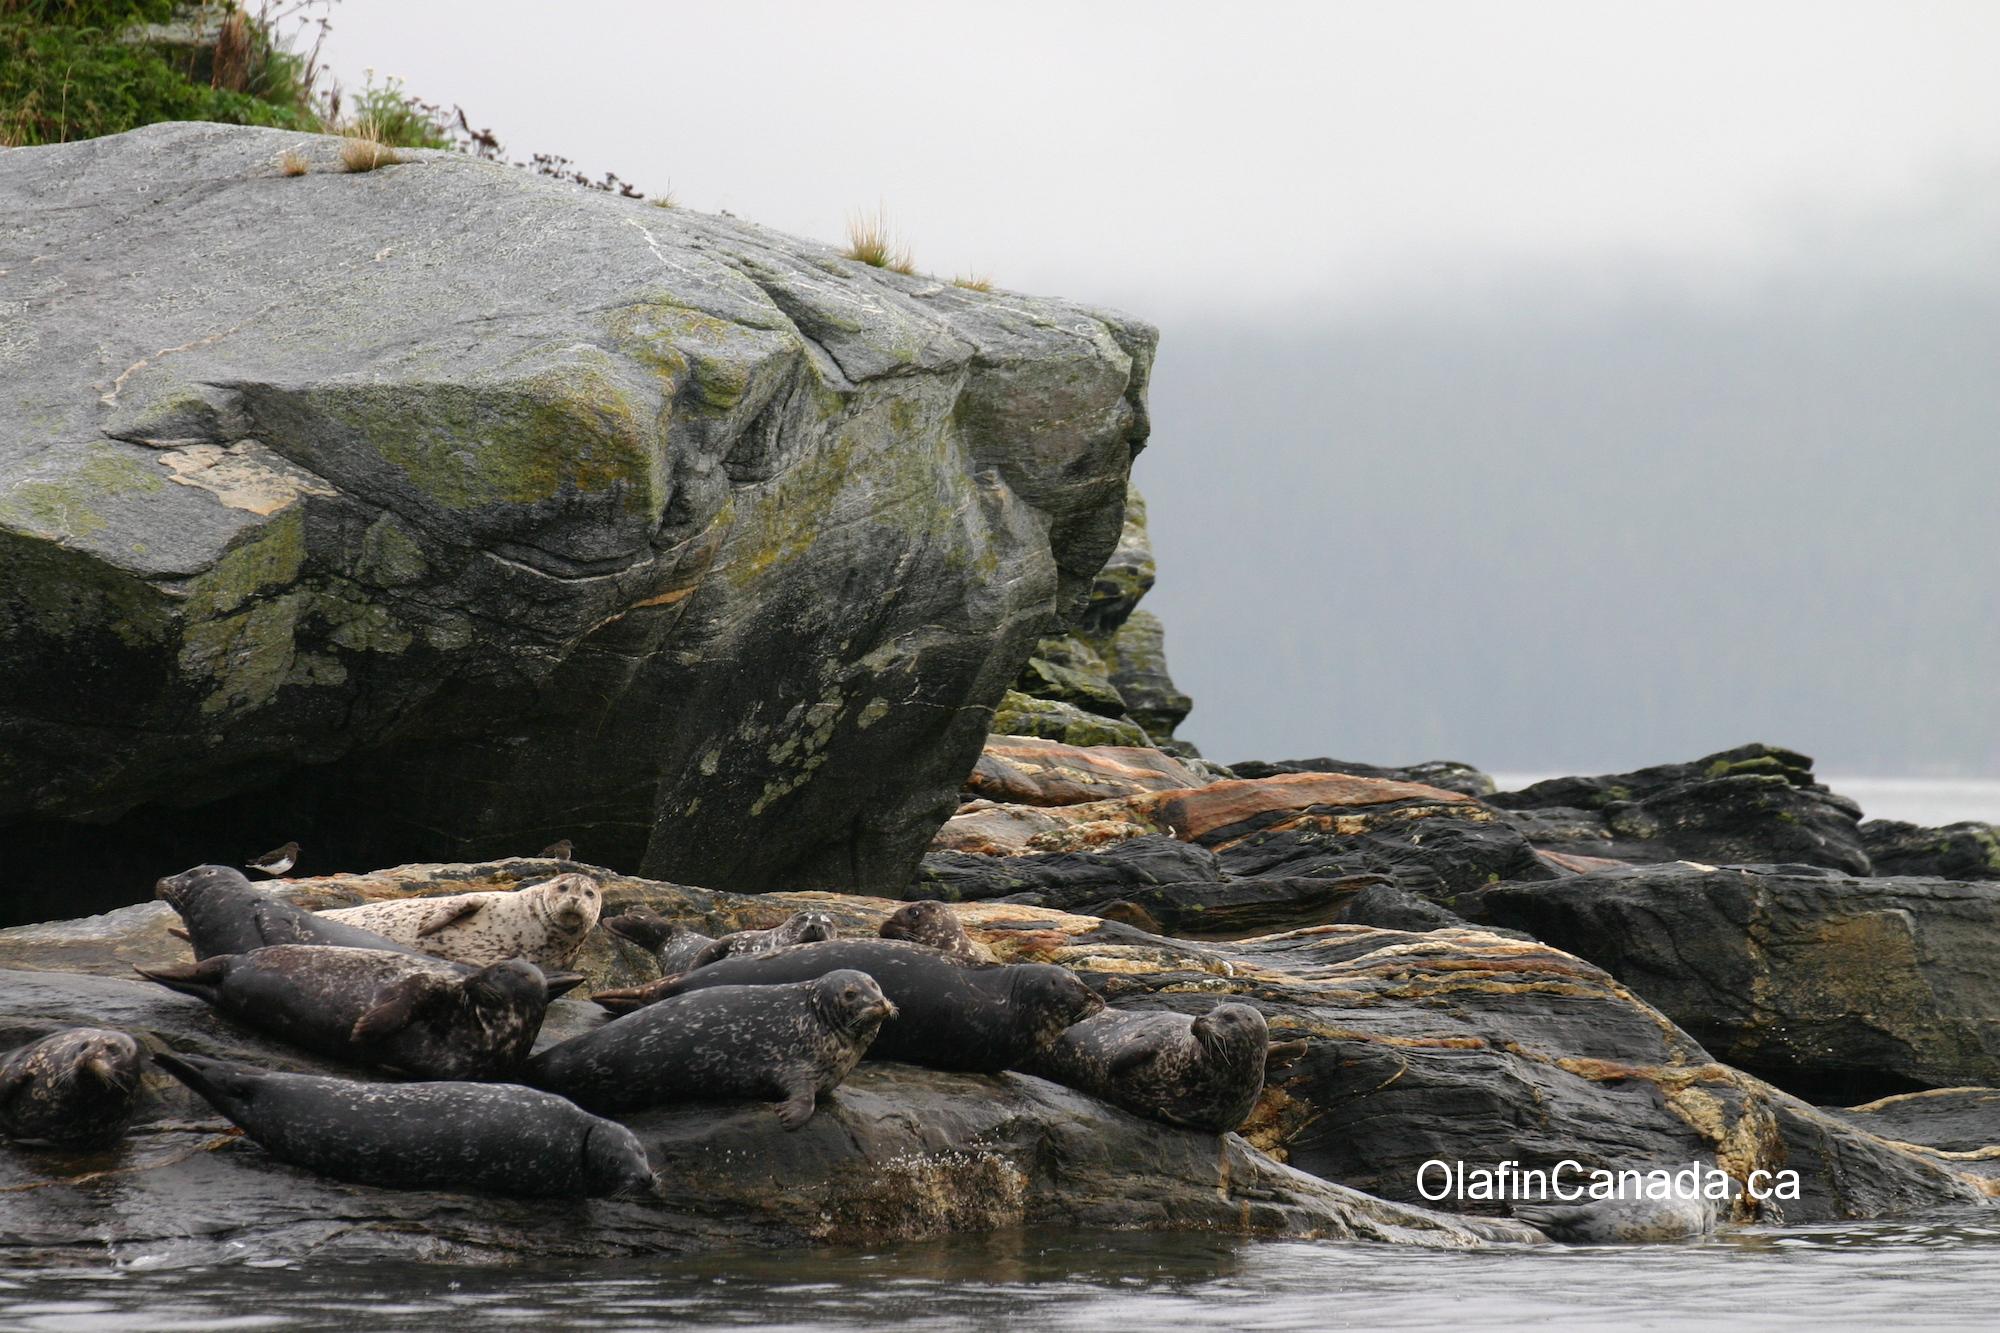 Seals on BC coast near Terrace #olafincanada #britishcolumbia #discoverbc #terrace #wildlife #seal